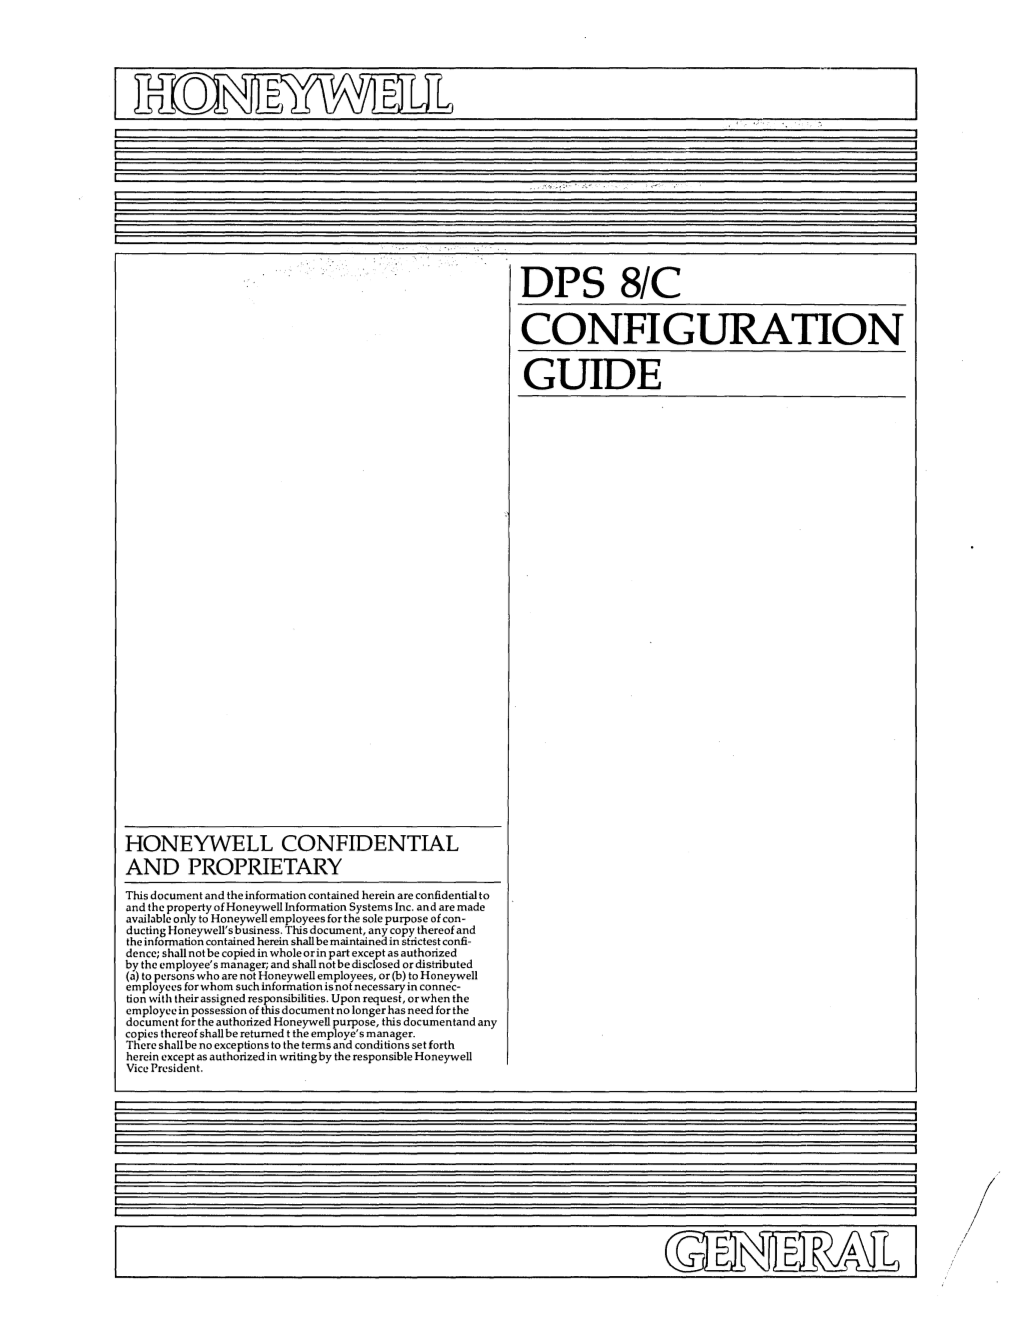 Configuration Guide